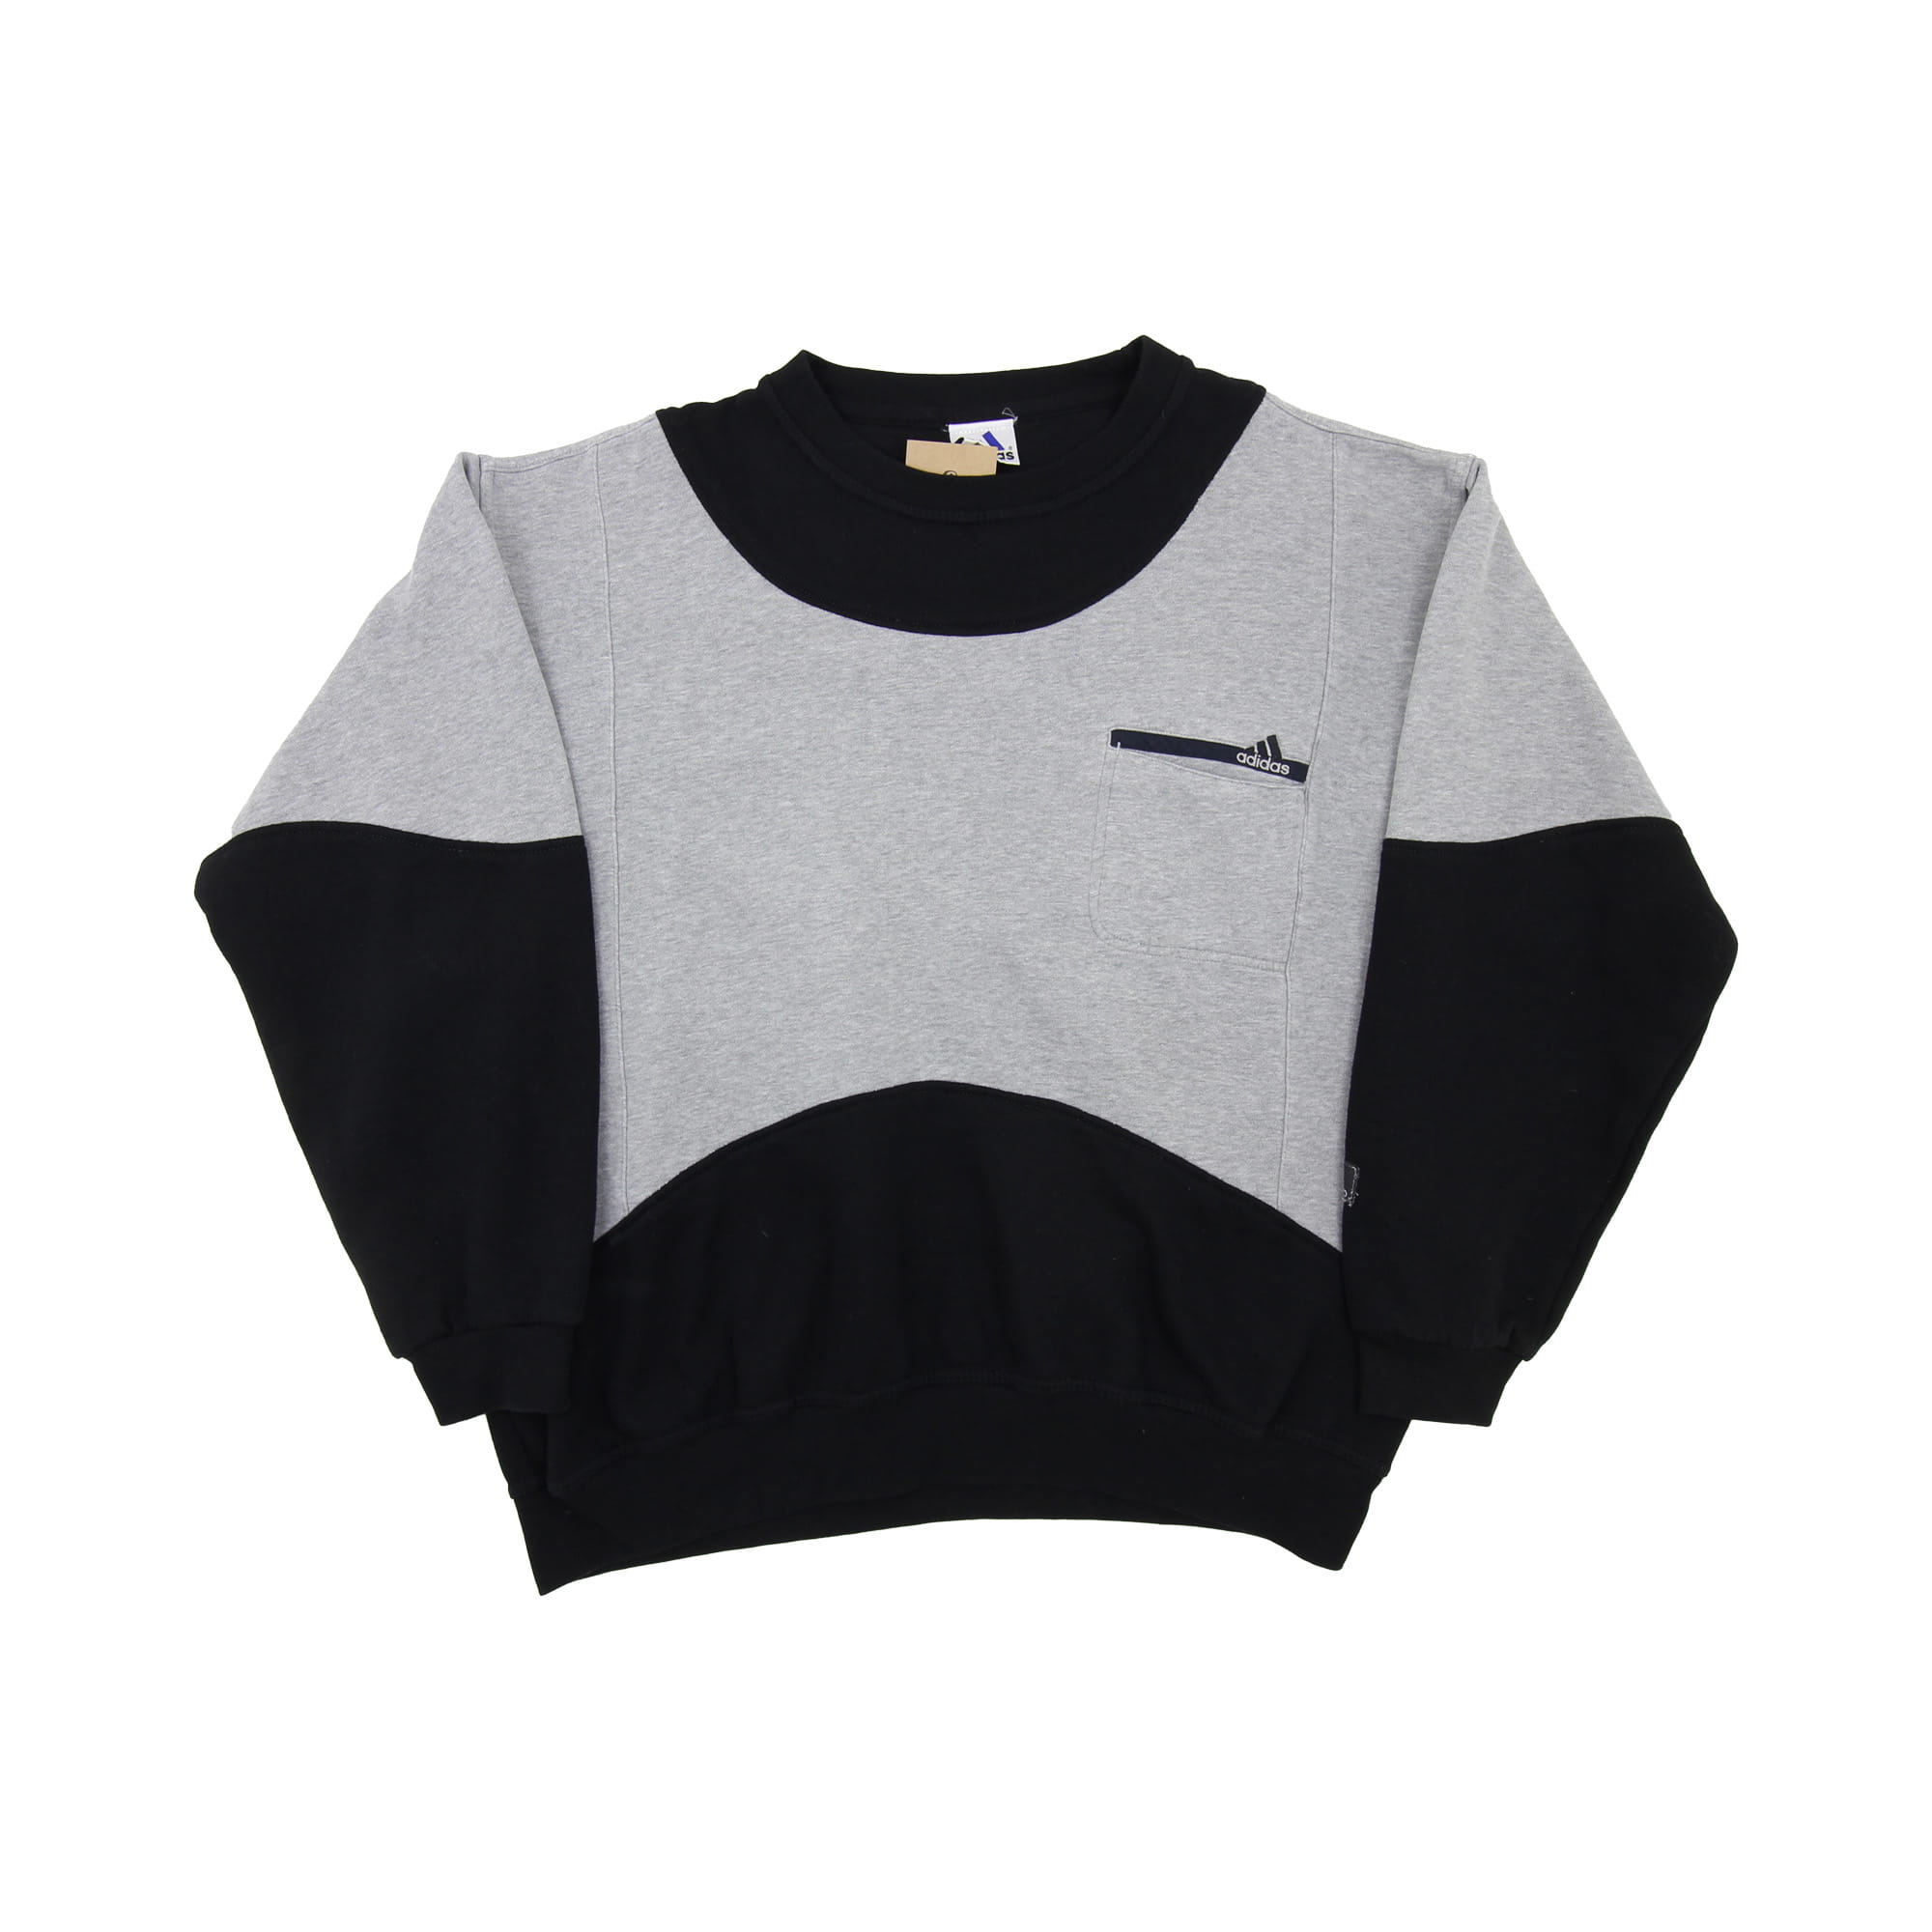 Adidas Rework Sweatshirt - XL/XXL S2461